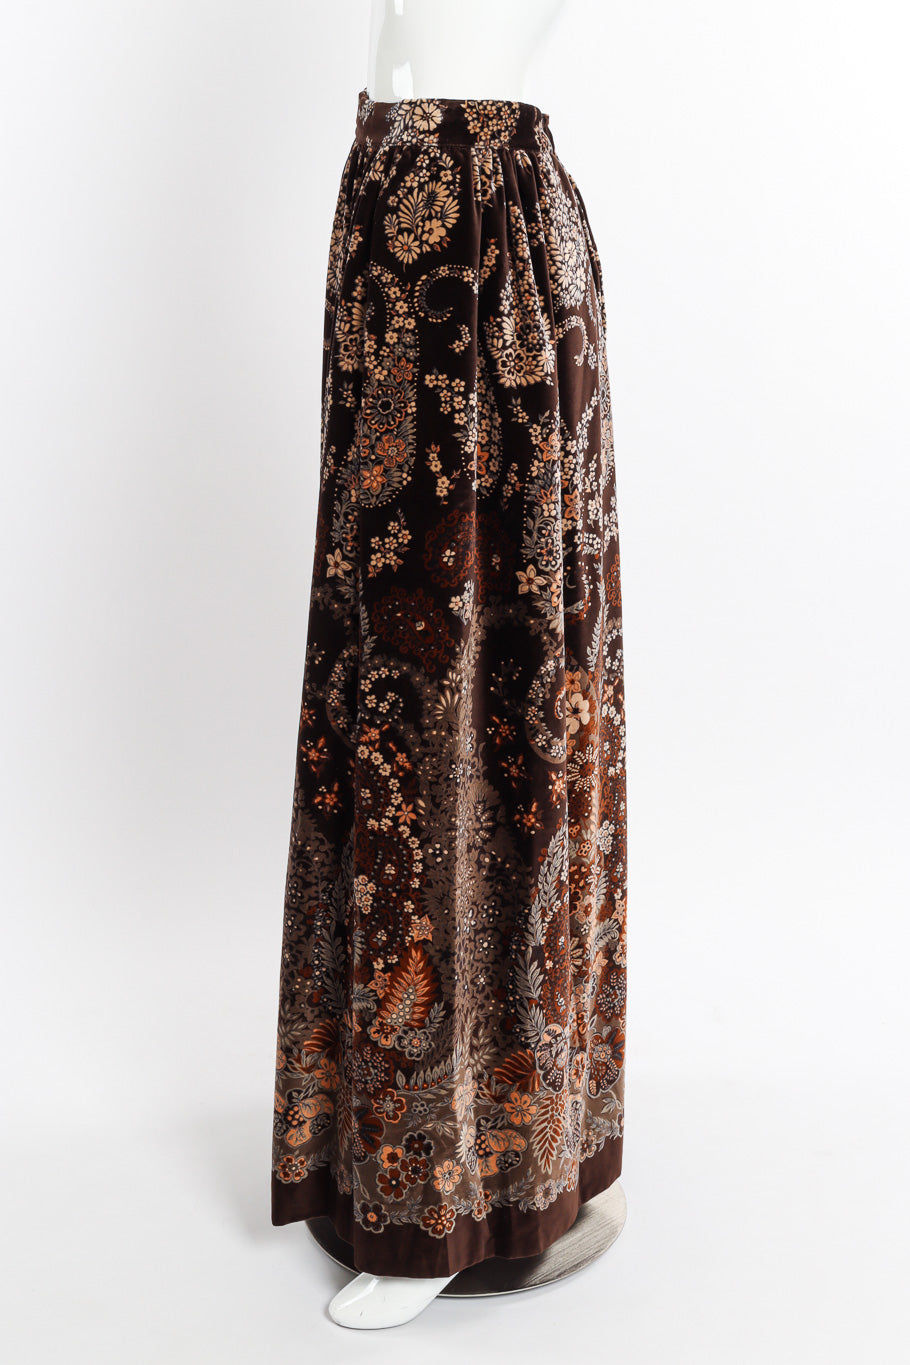 Vintage Adolfo Floral Velvet Ball Skirt side on mannequin @recessla